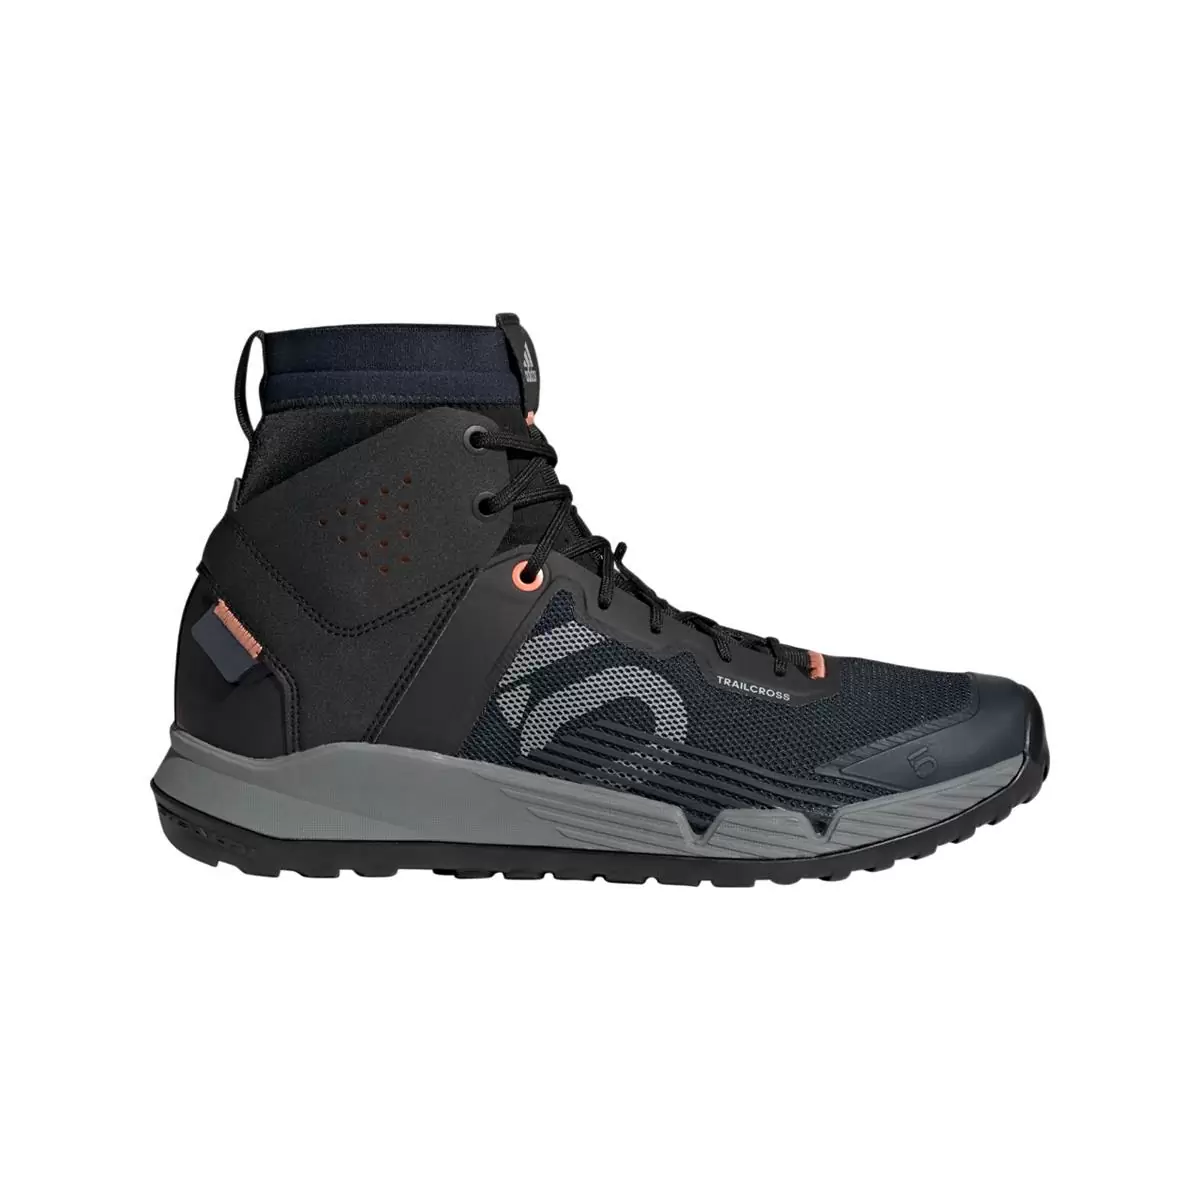 Flat 5.10 Trailcross Mid Pro MTB Shoes Black/Grey Size 42 - image